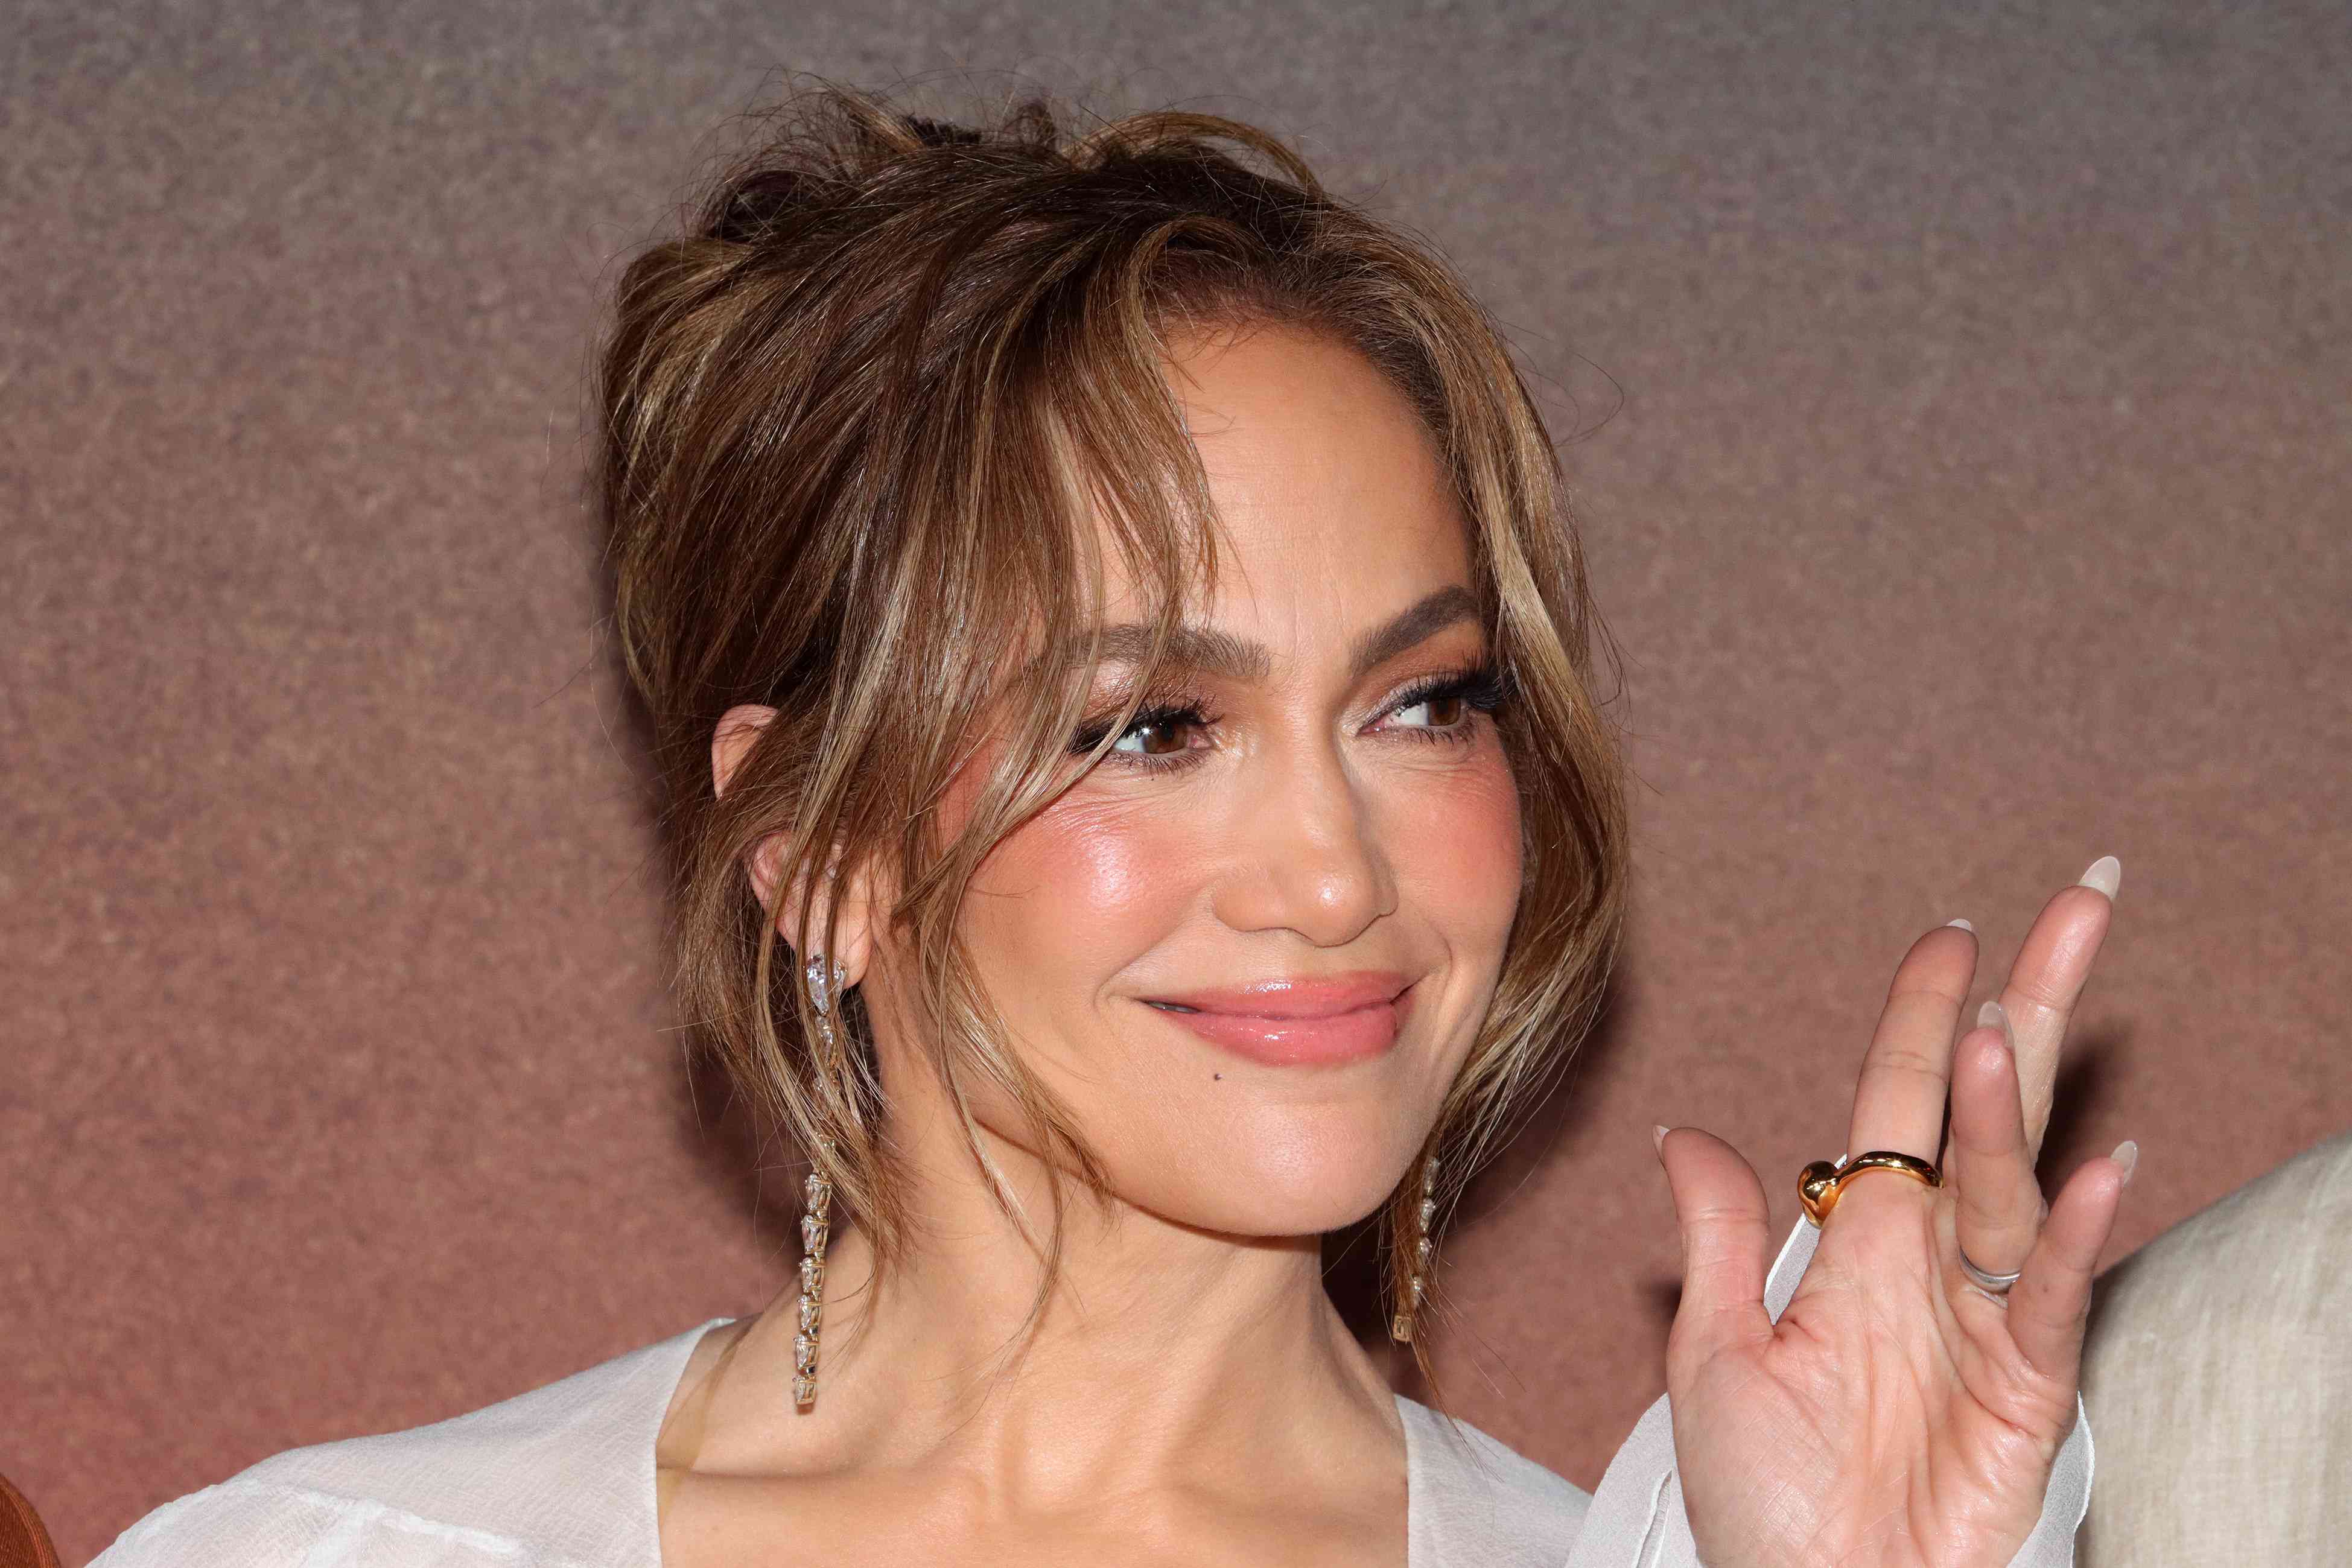 Jennifer Lopez Poses Next to "Don't F With JLo" Billboard Amid Ben Affleck Divorce Rumors